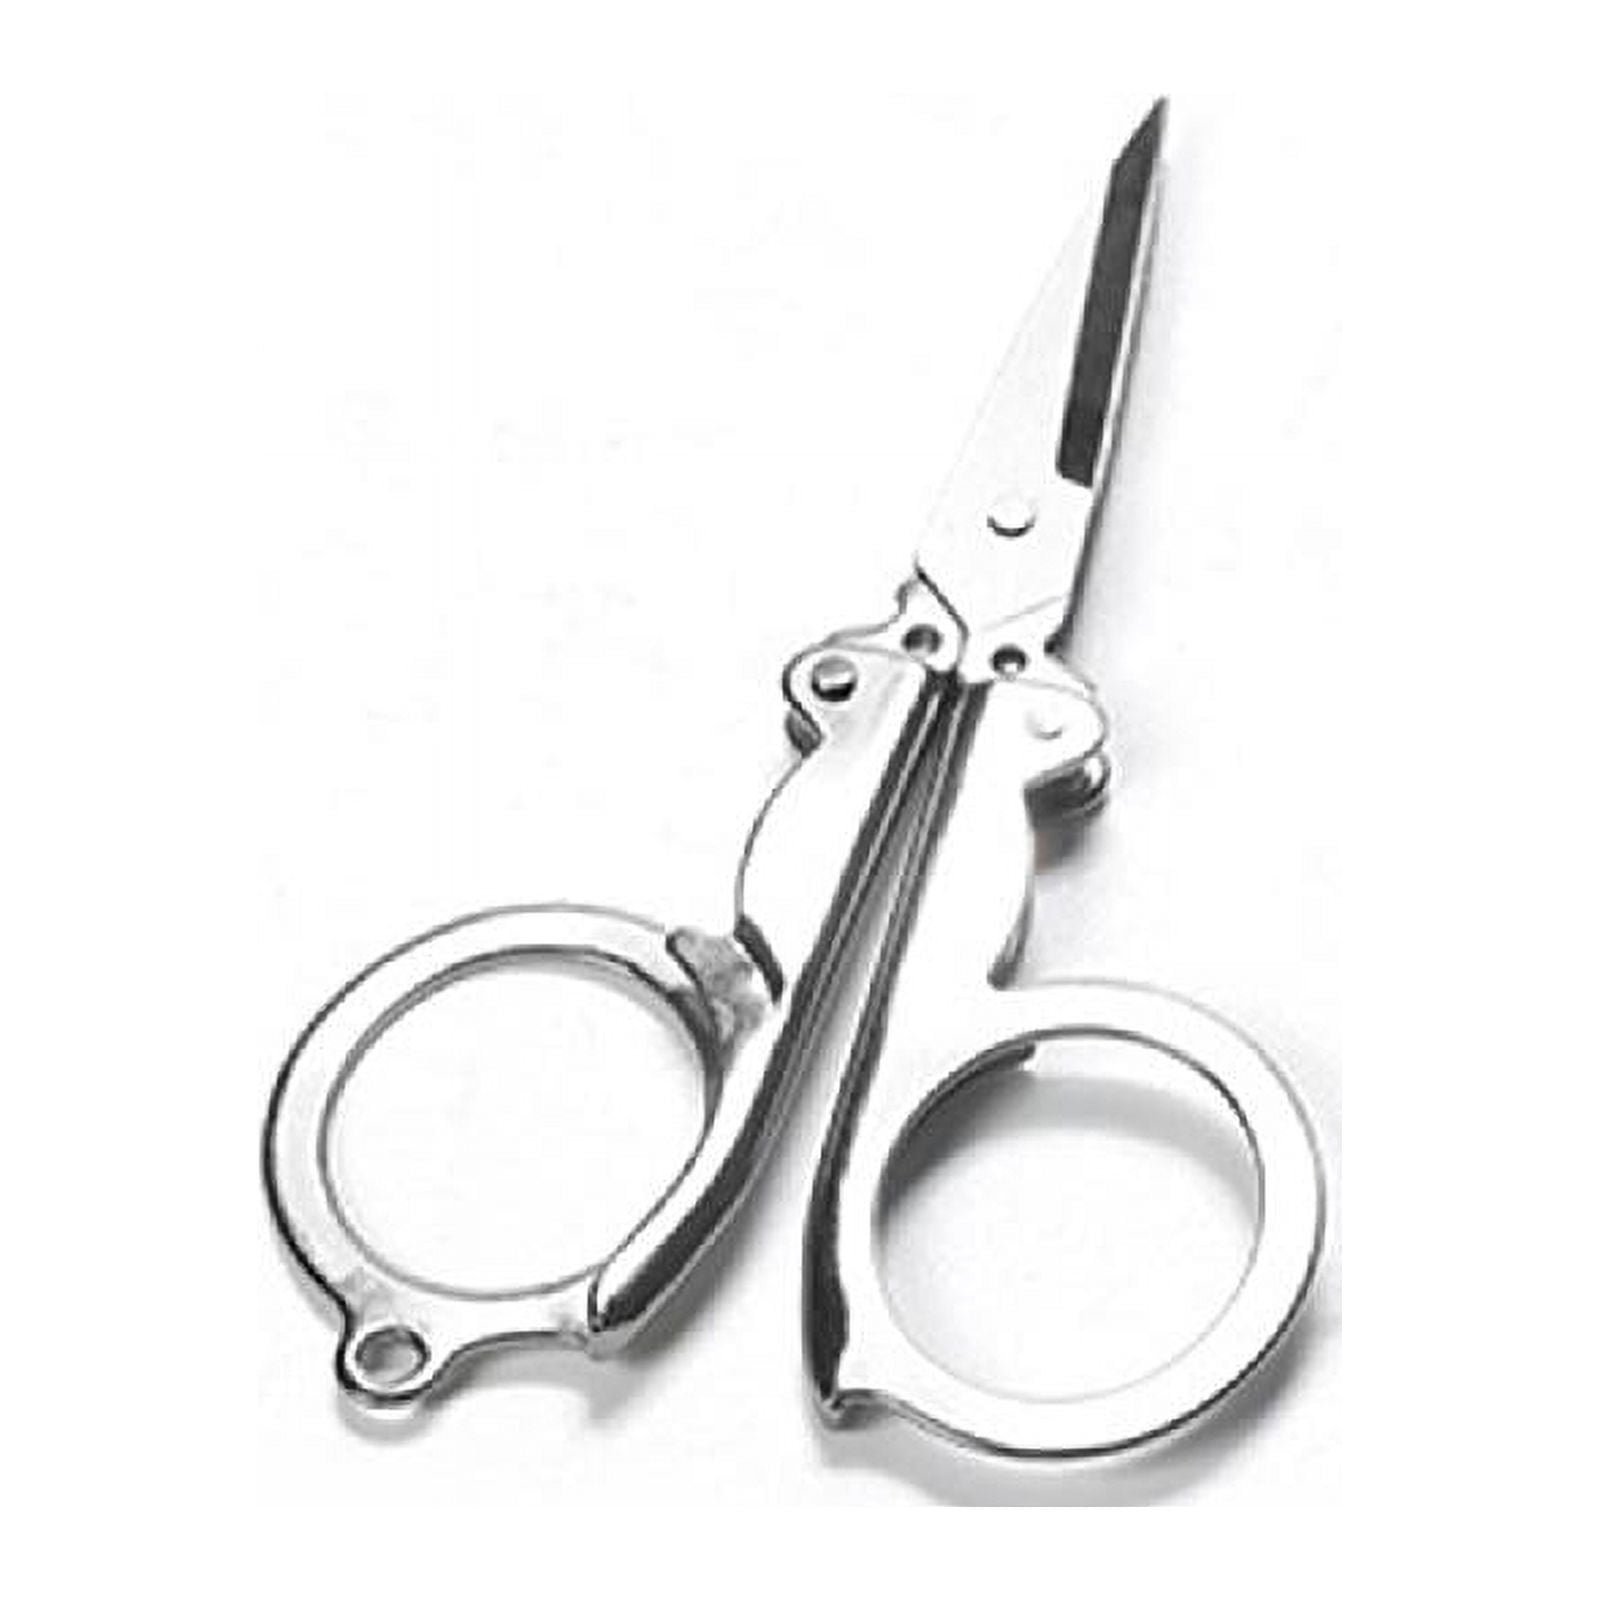 Stainless Steel Folding Scissors Portable Foldable Scissors Craft Scissors  Small/Medium/Large Optional for Office School